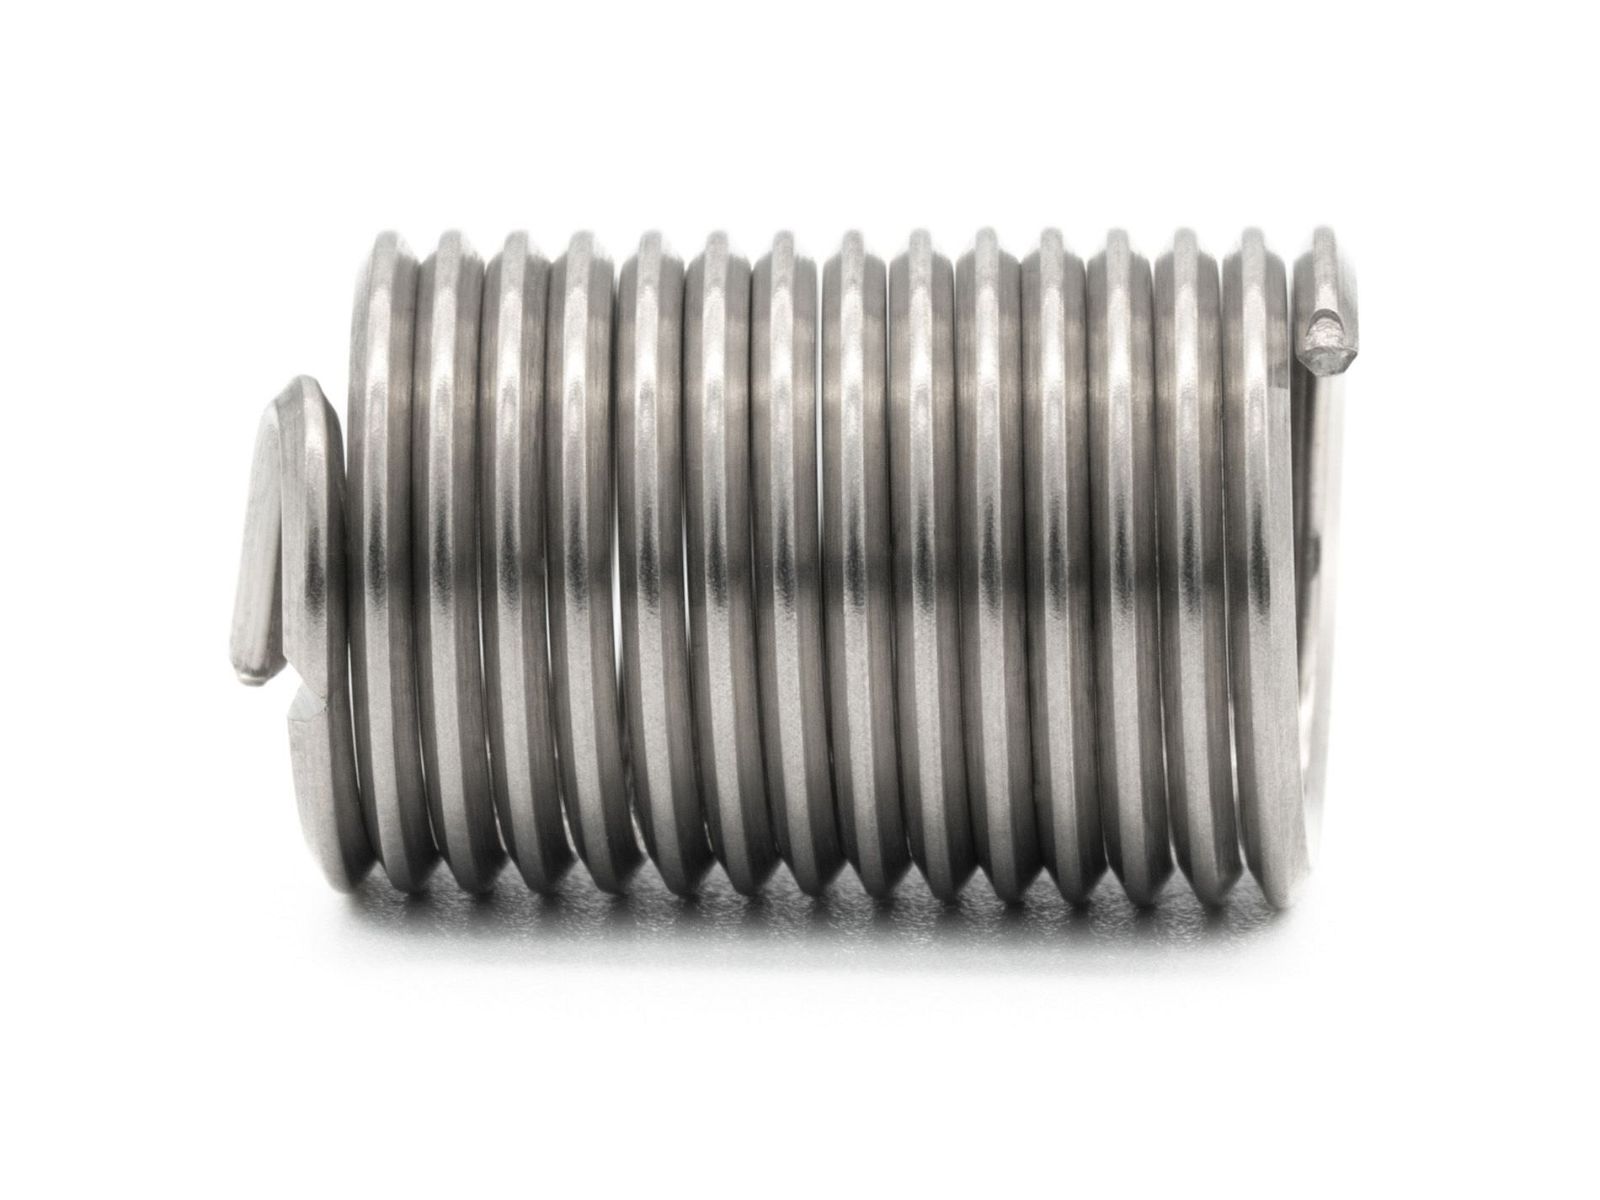 BaerCoil Wire Thread Inserts BSW 7/16 x 14 - 2.5 D (27.78 mm) - free running - 100 pcs.